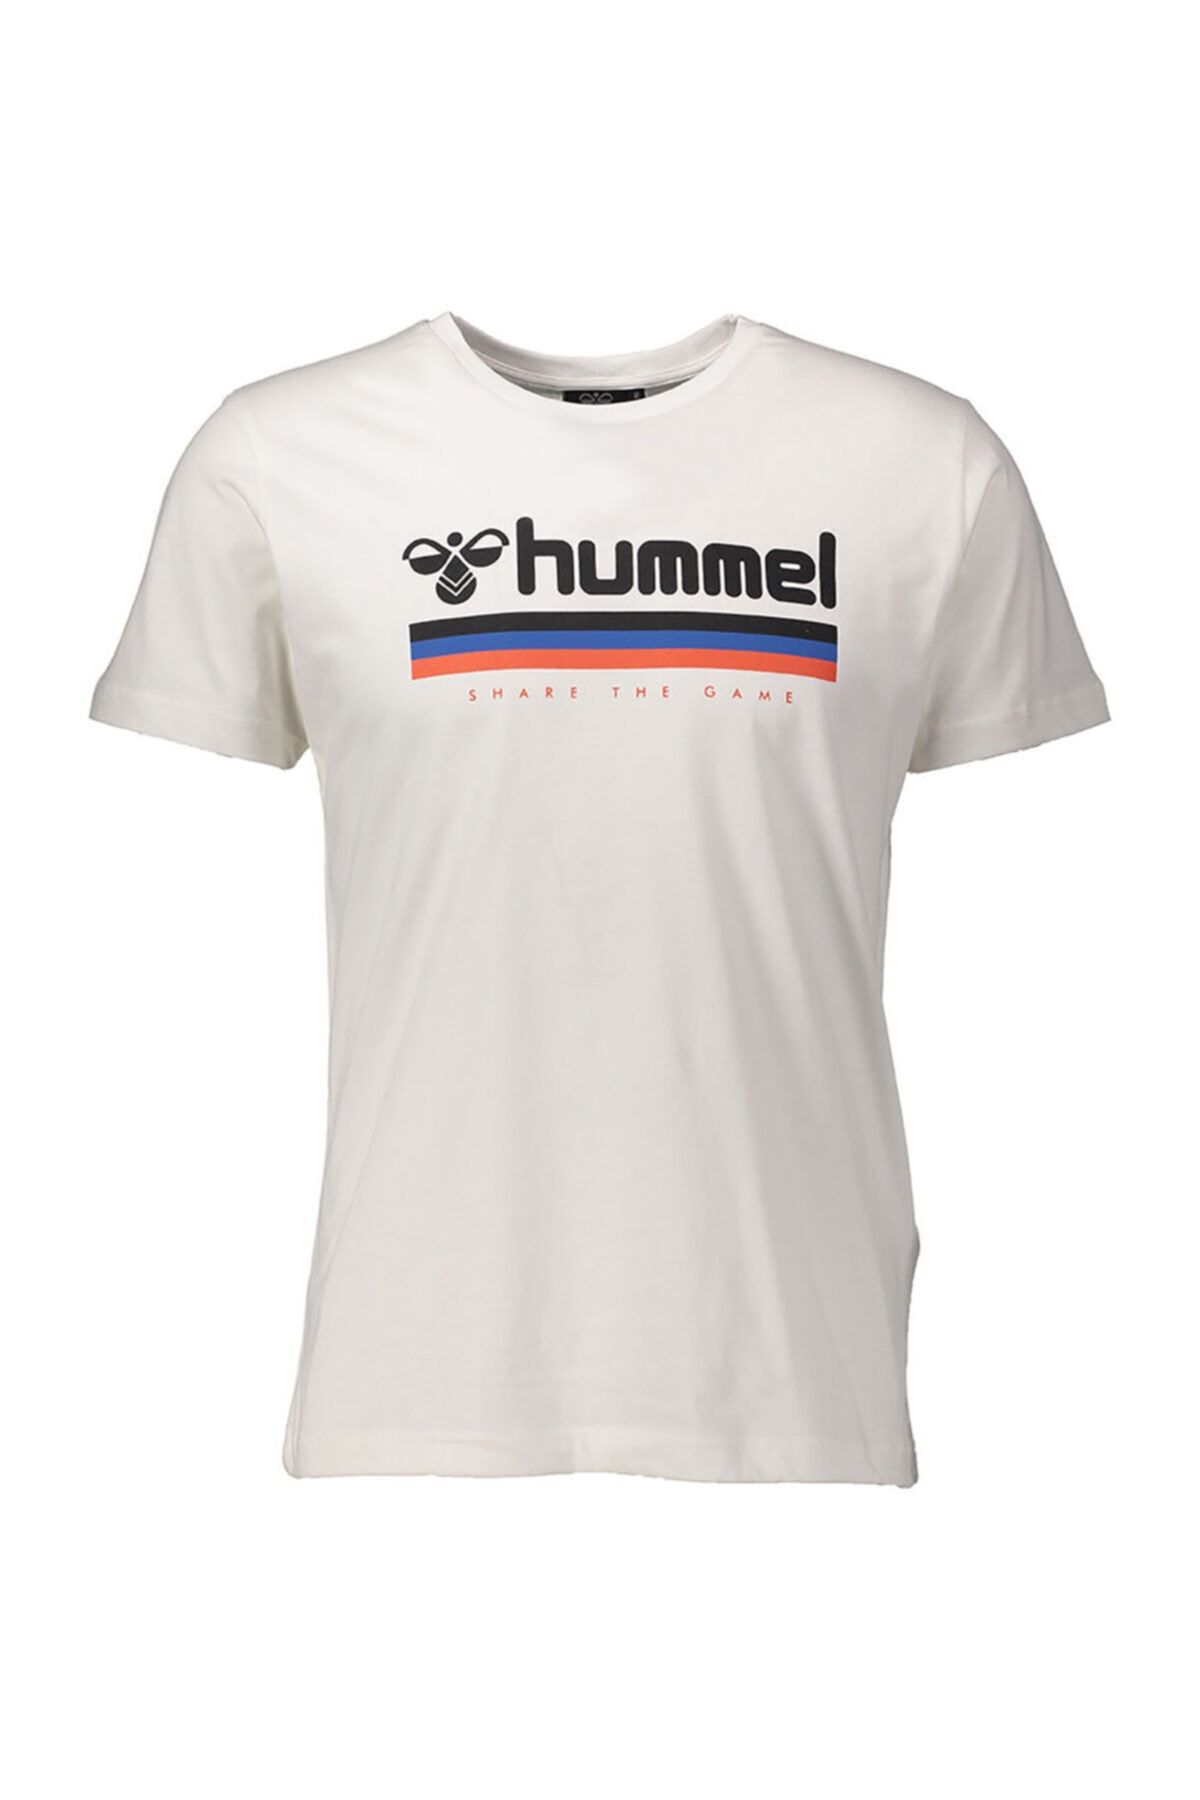 hummel Willy Erkek Beyaz Tişört (911051-9003)